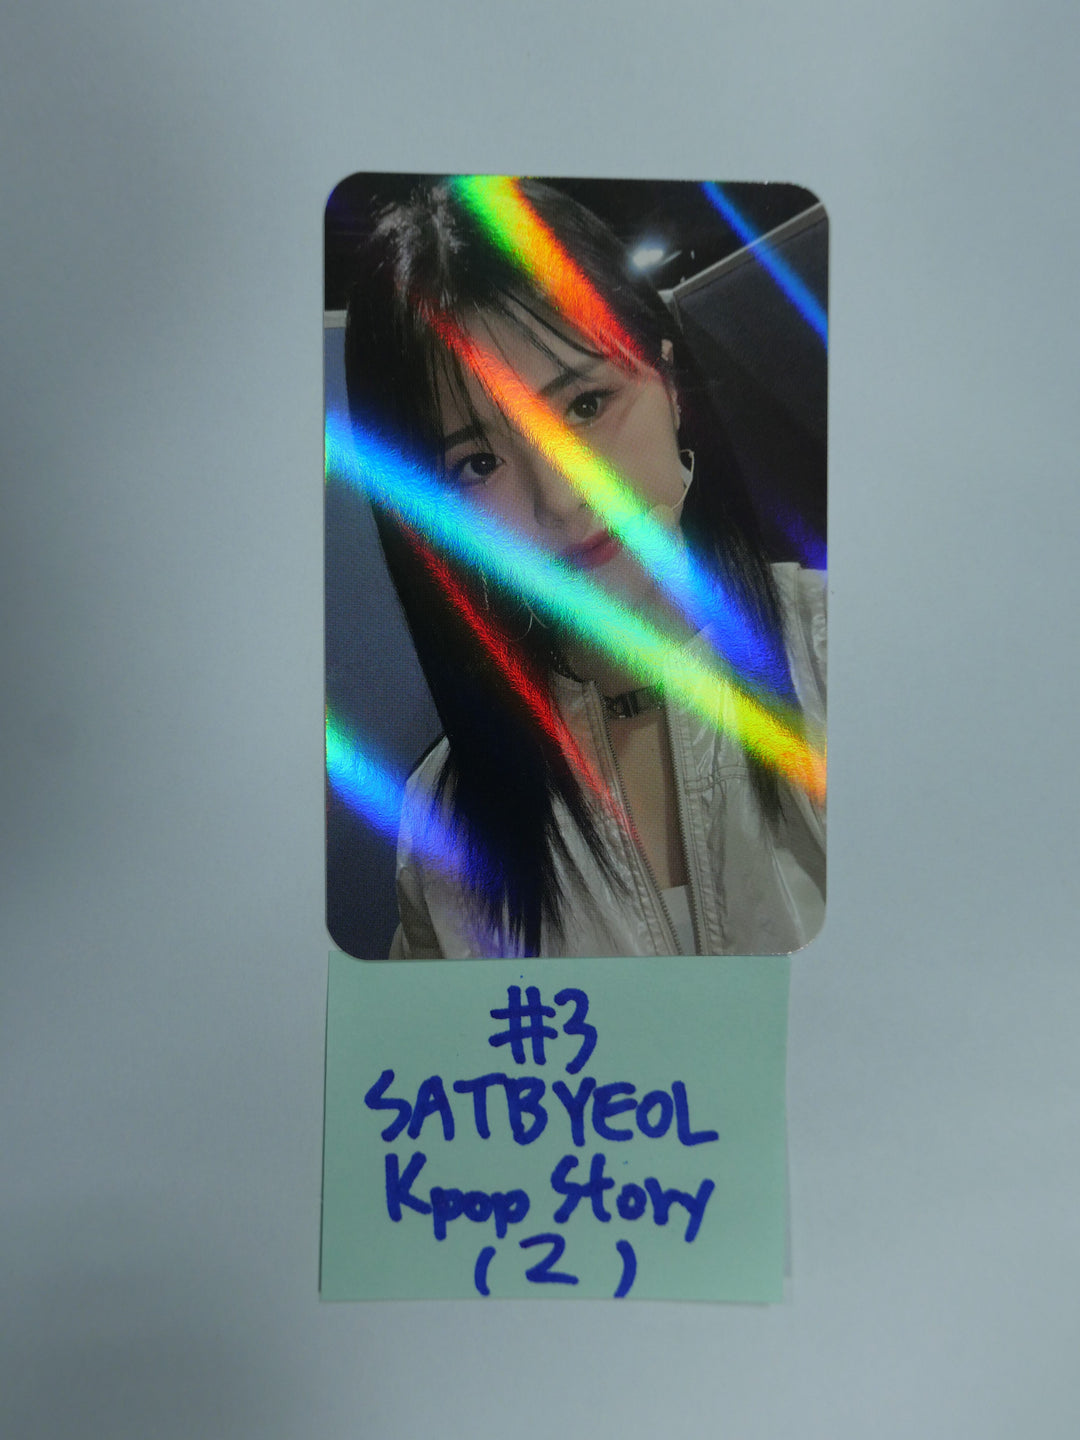 Pixy 'Fairyforest : Temptation' - Kpopstory Fansign Event Hologram Photocard